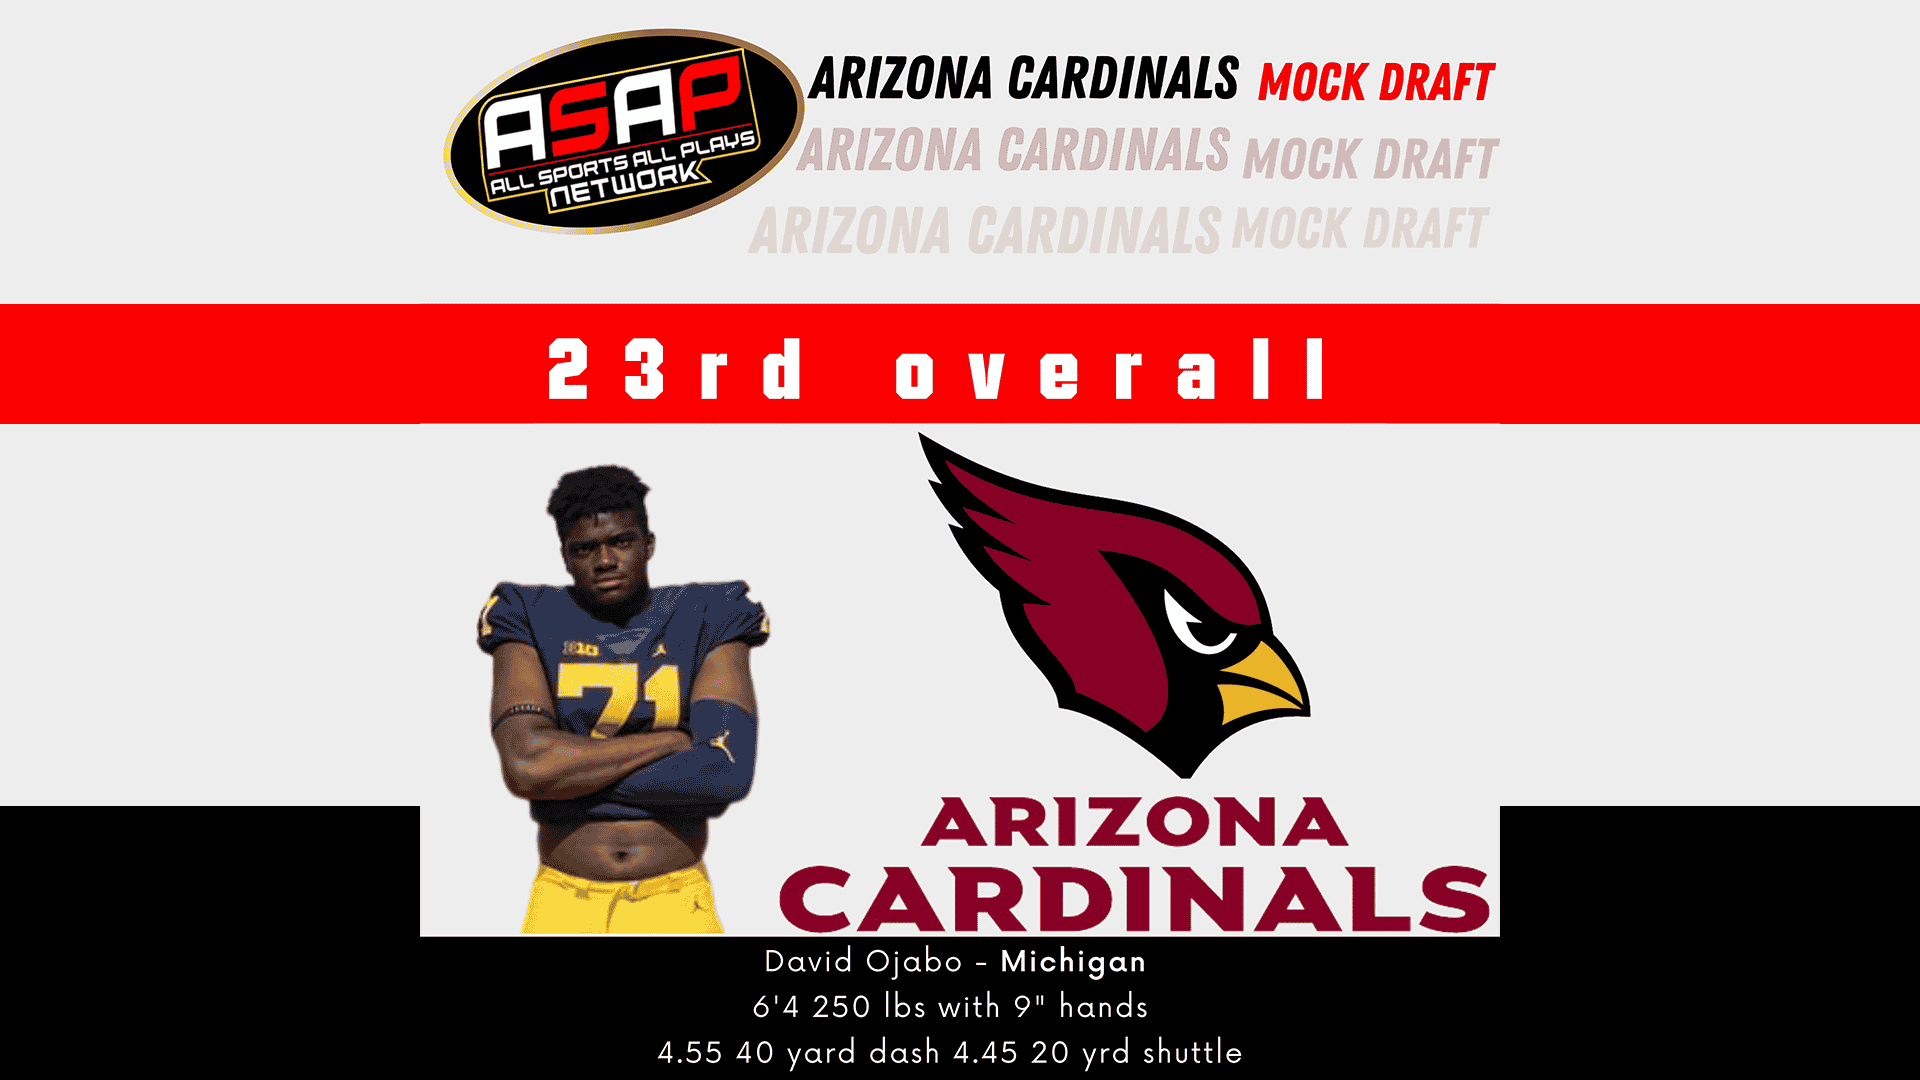 Arizona Cardinales Mock Draft